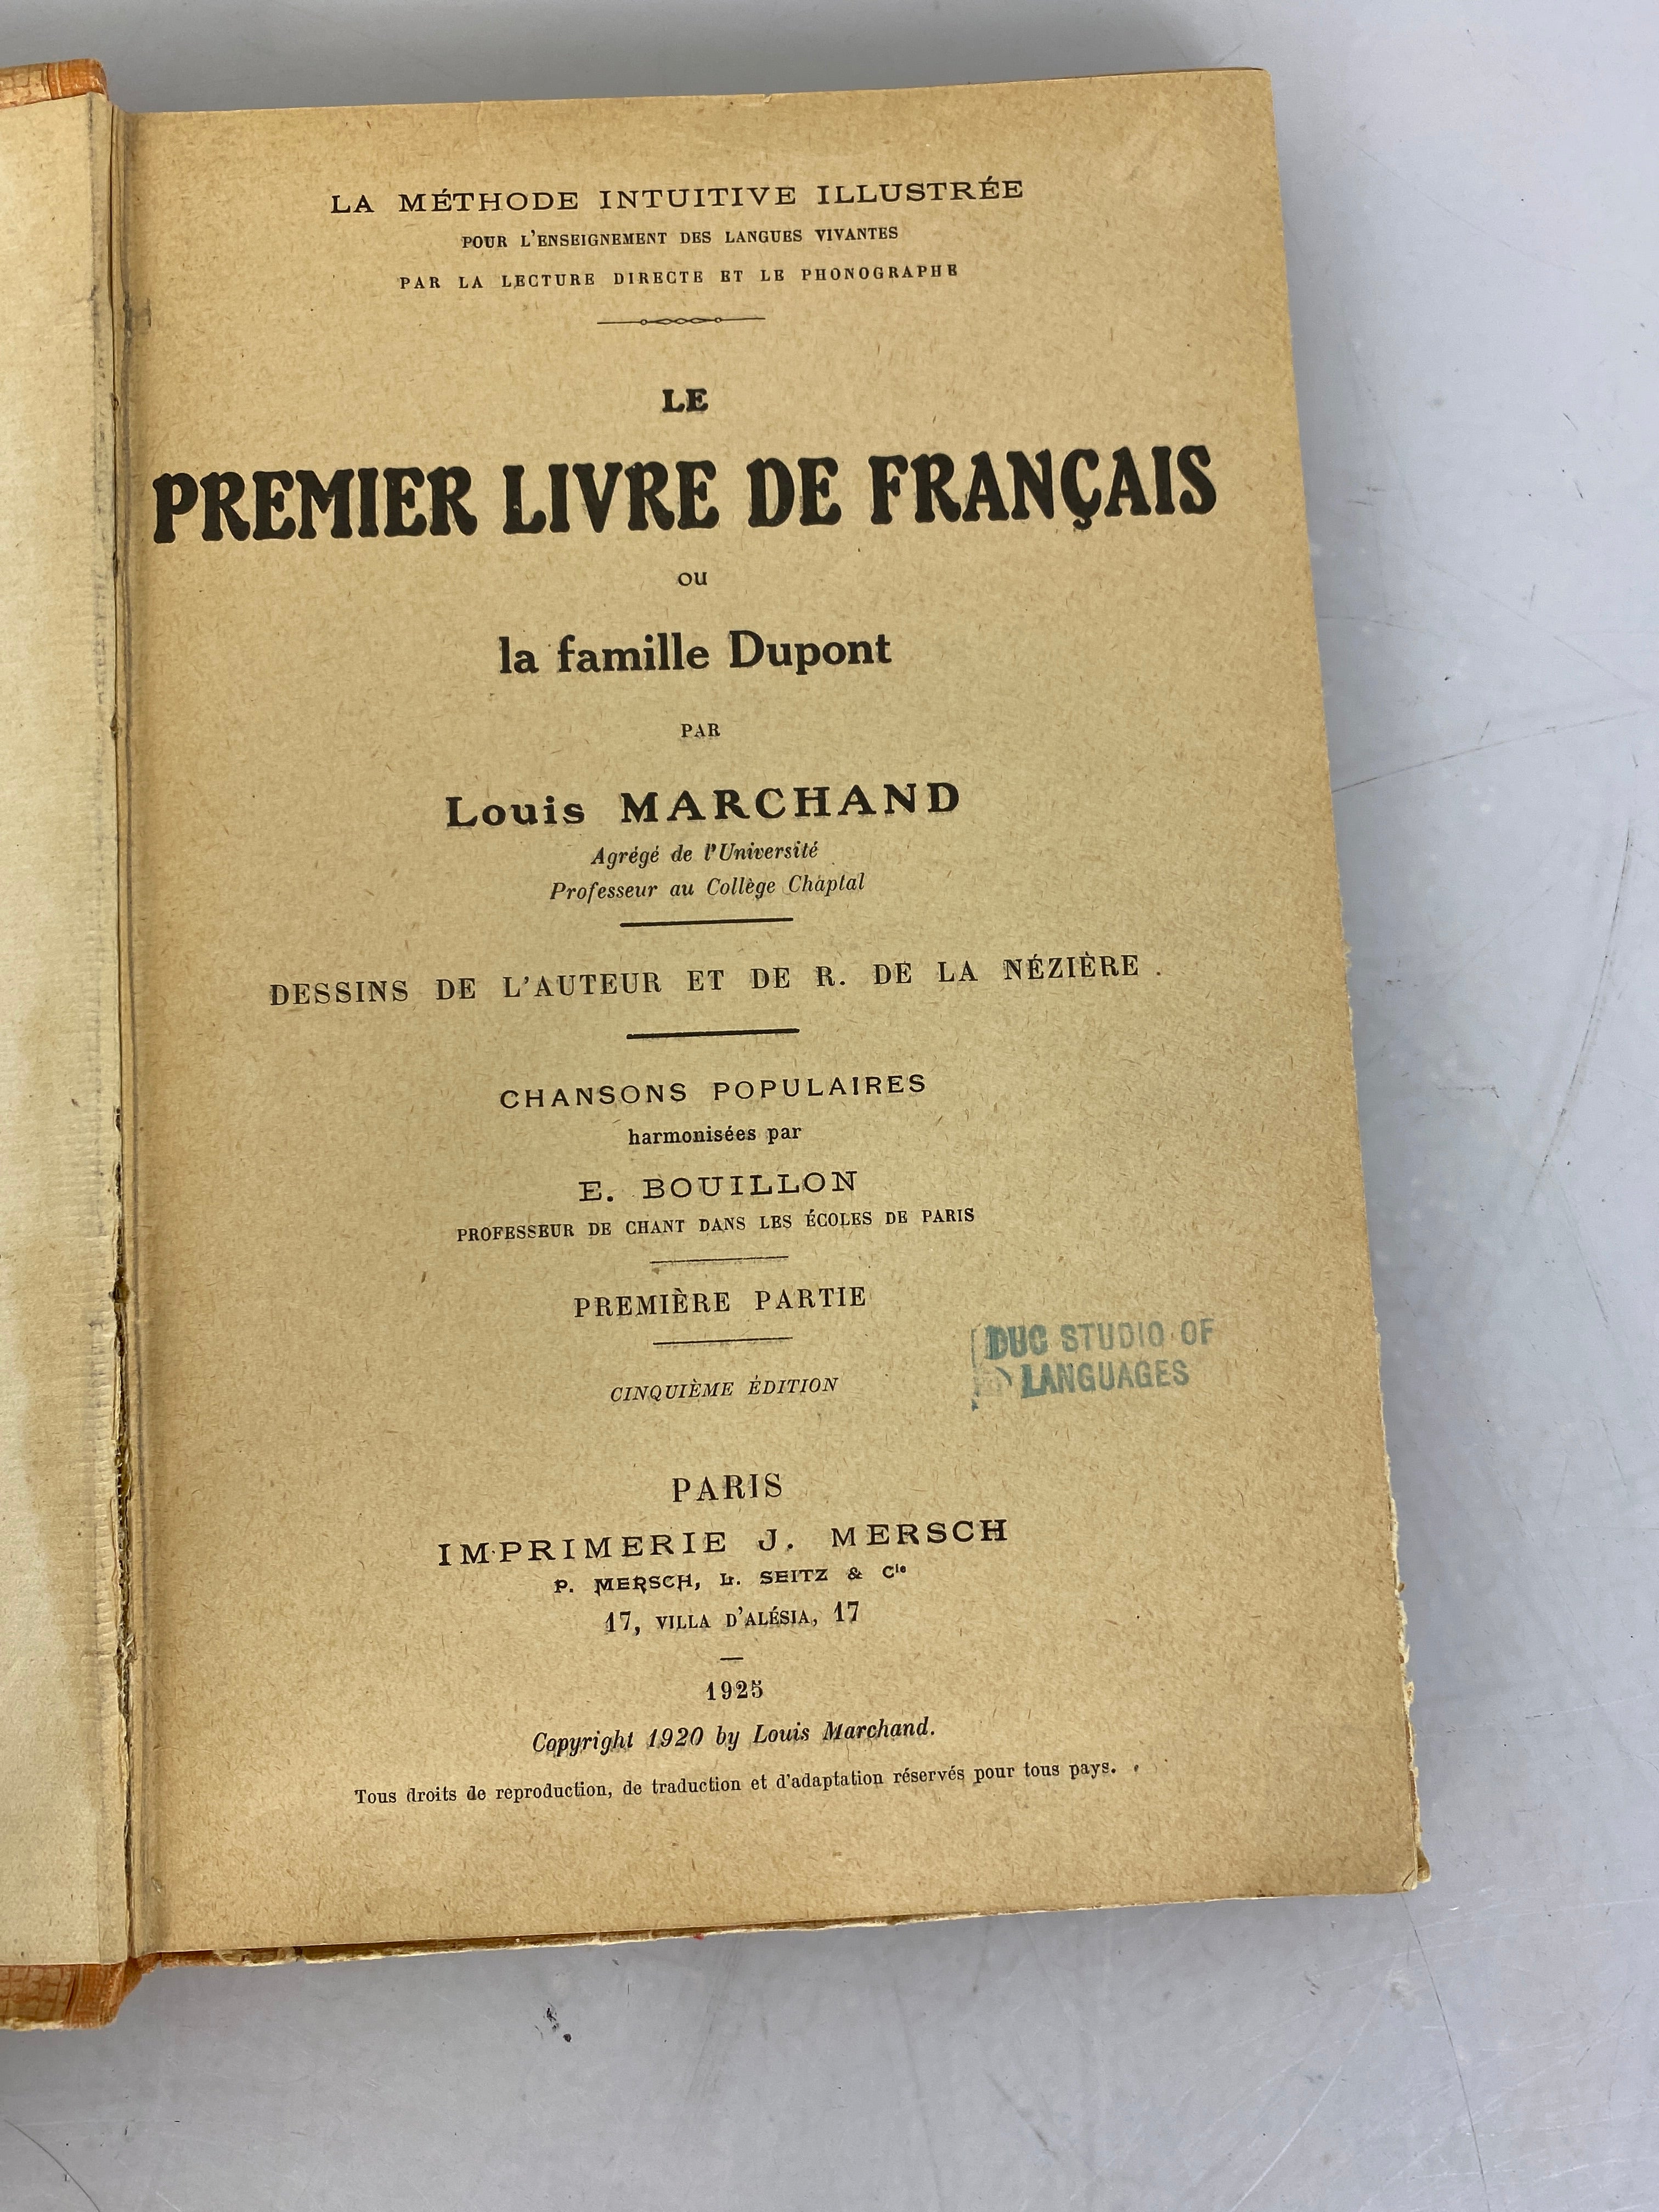 Le Premier Livre de Francais by Louis Marchand (First Book of French) 5th Edition (c1920) HC